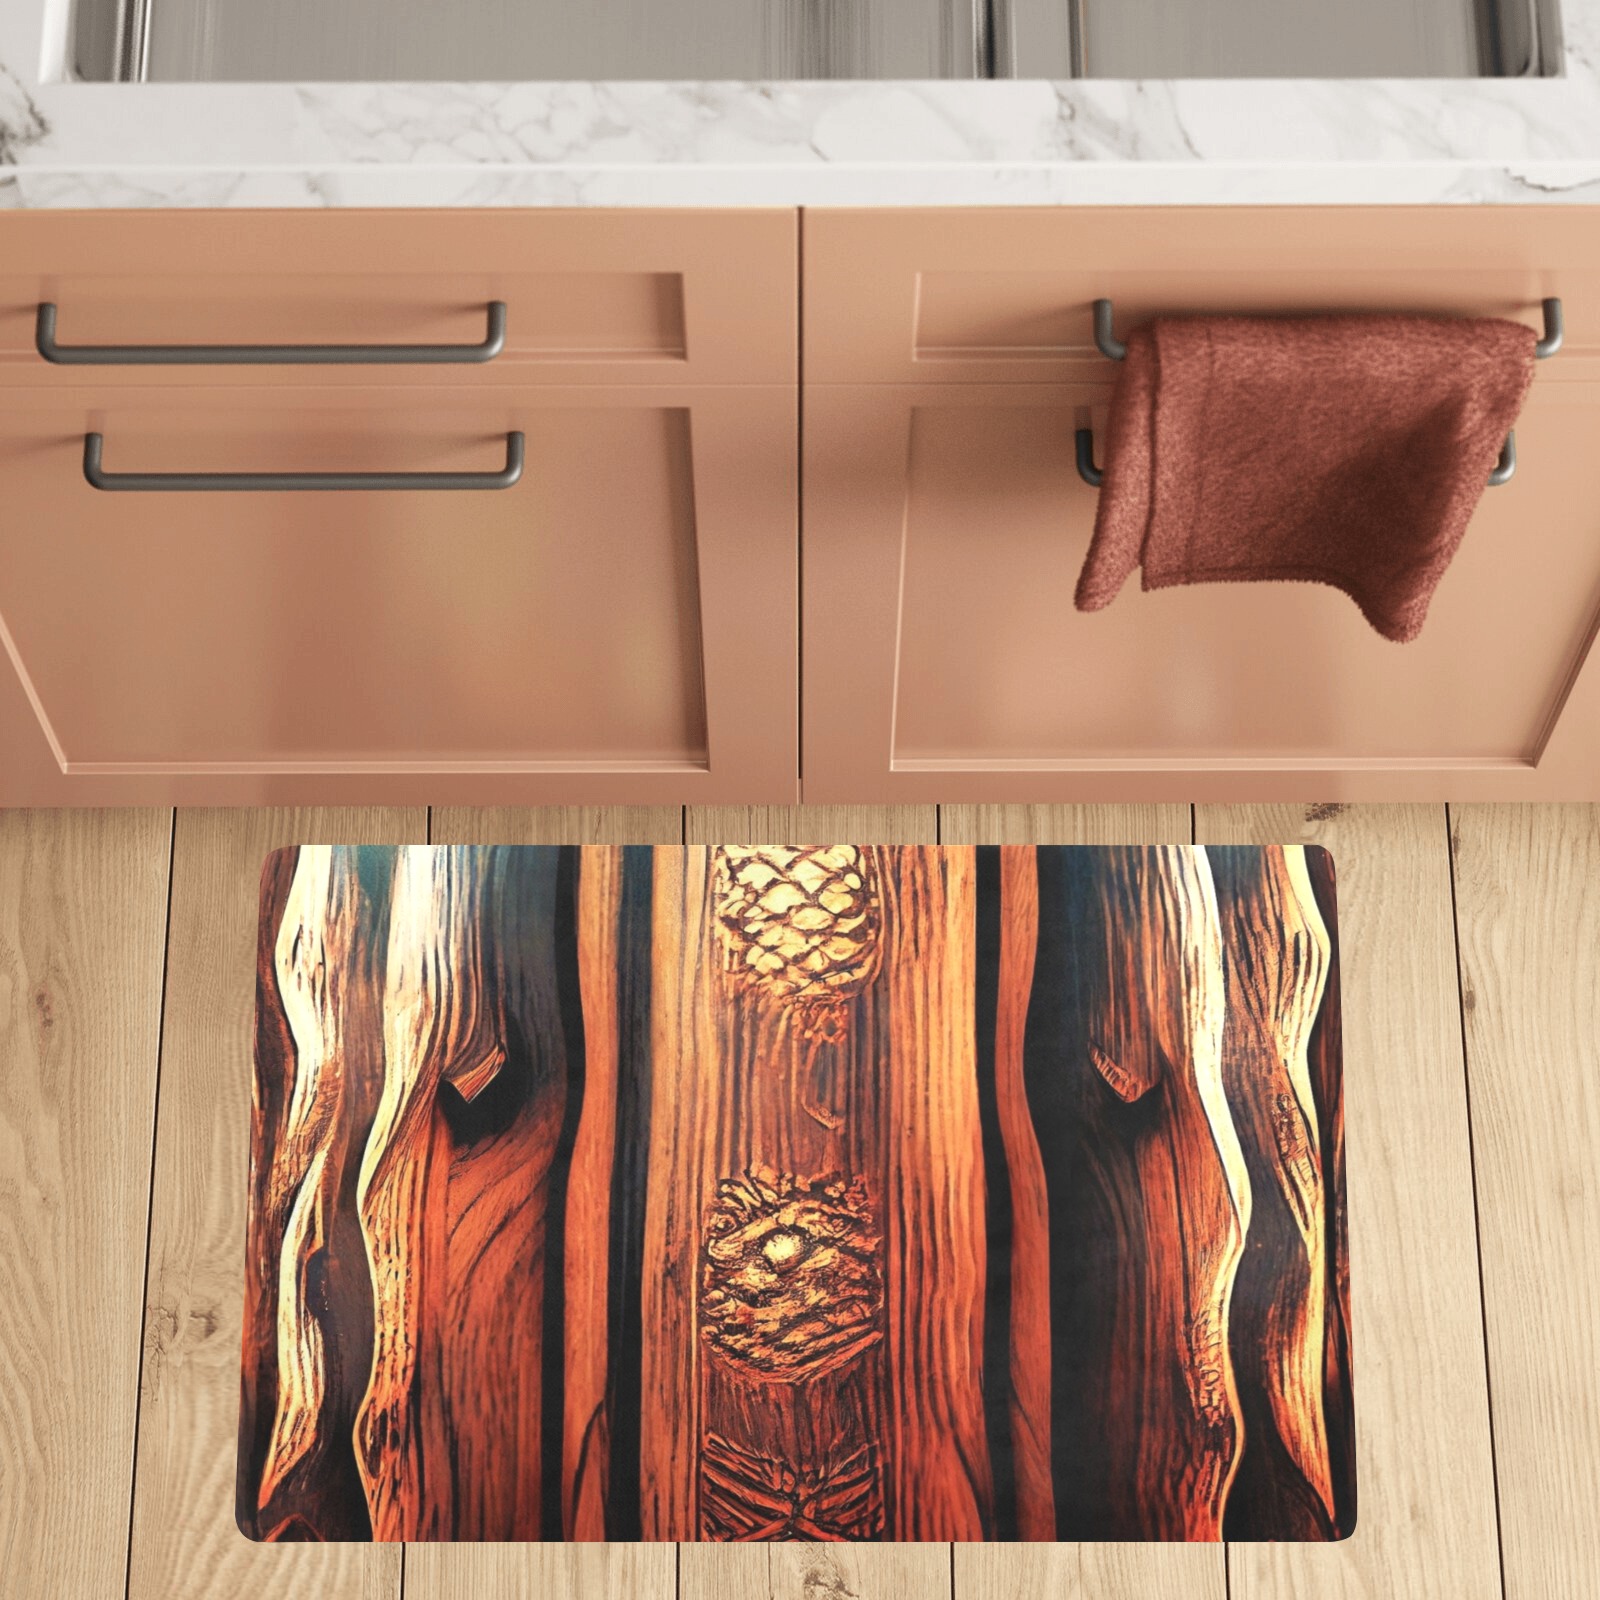 Aztec pattern on wood Kitchen Mat 32"x20"